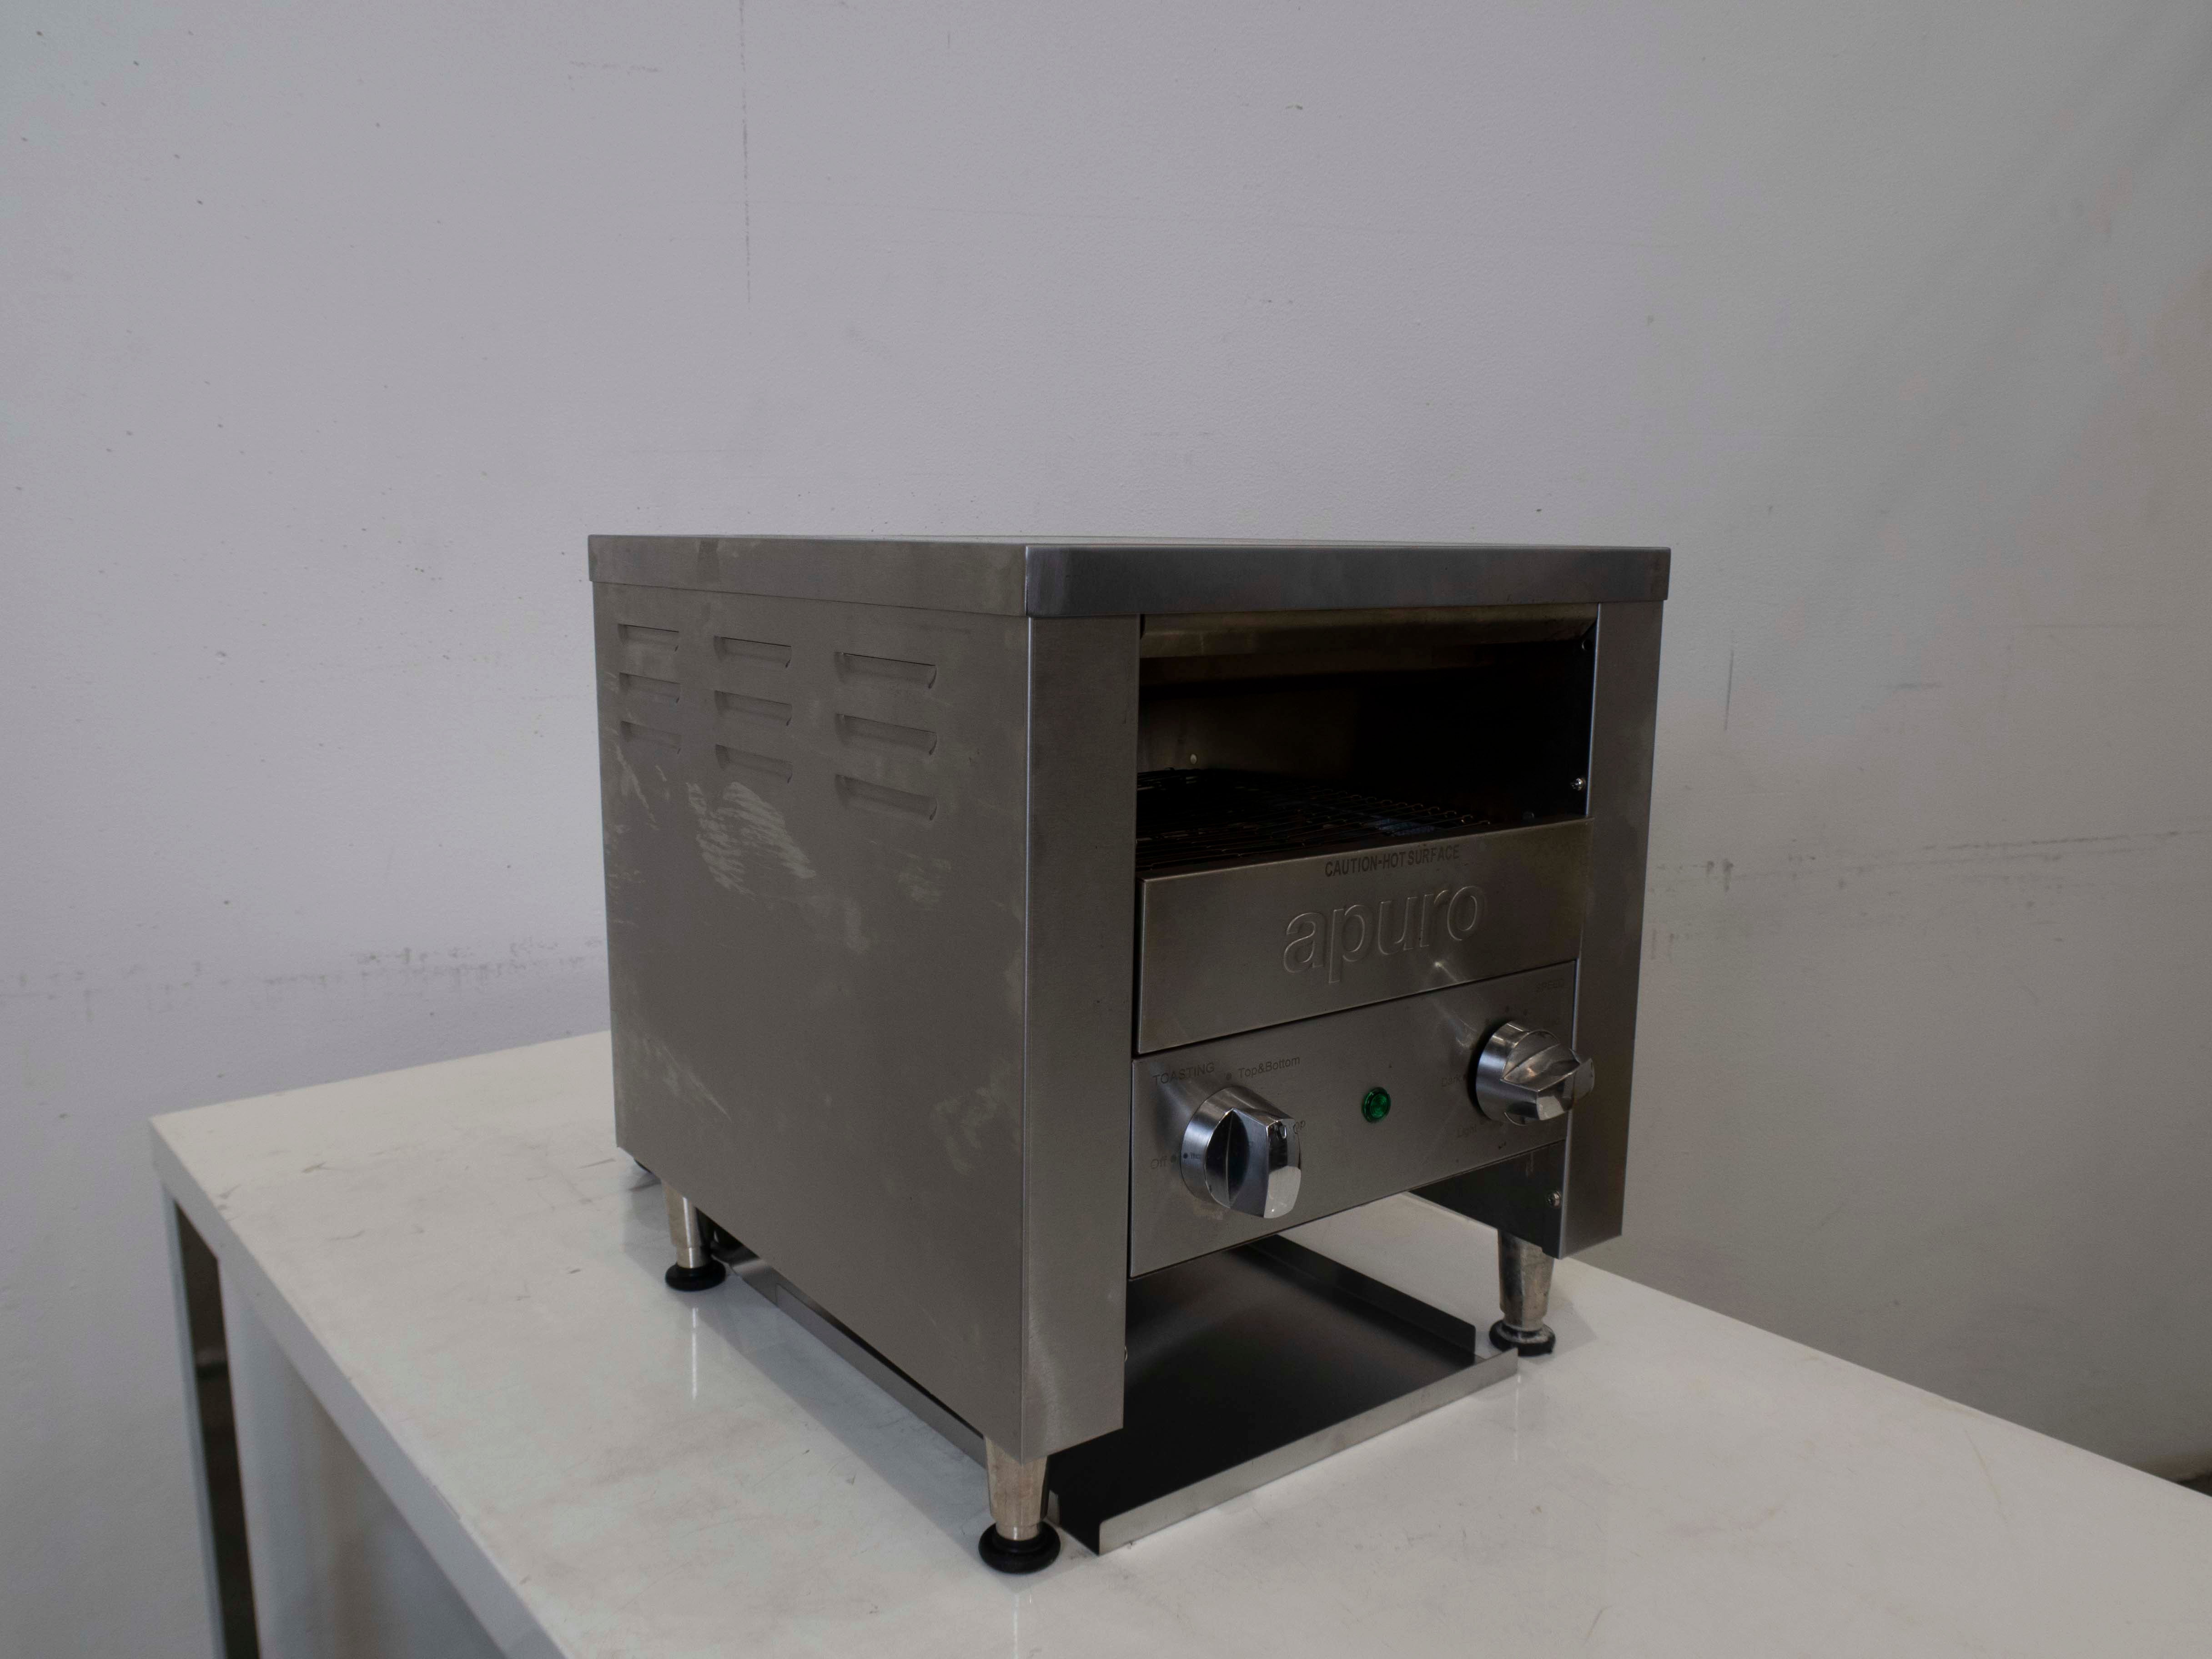 Thumbnail - Apuro DG074-A Conveyor Toaster